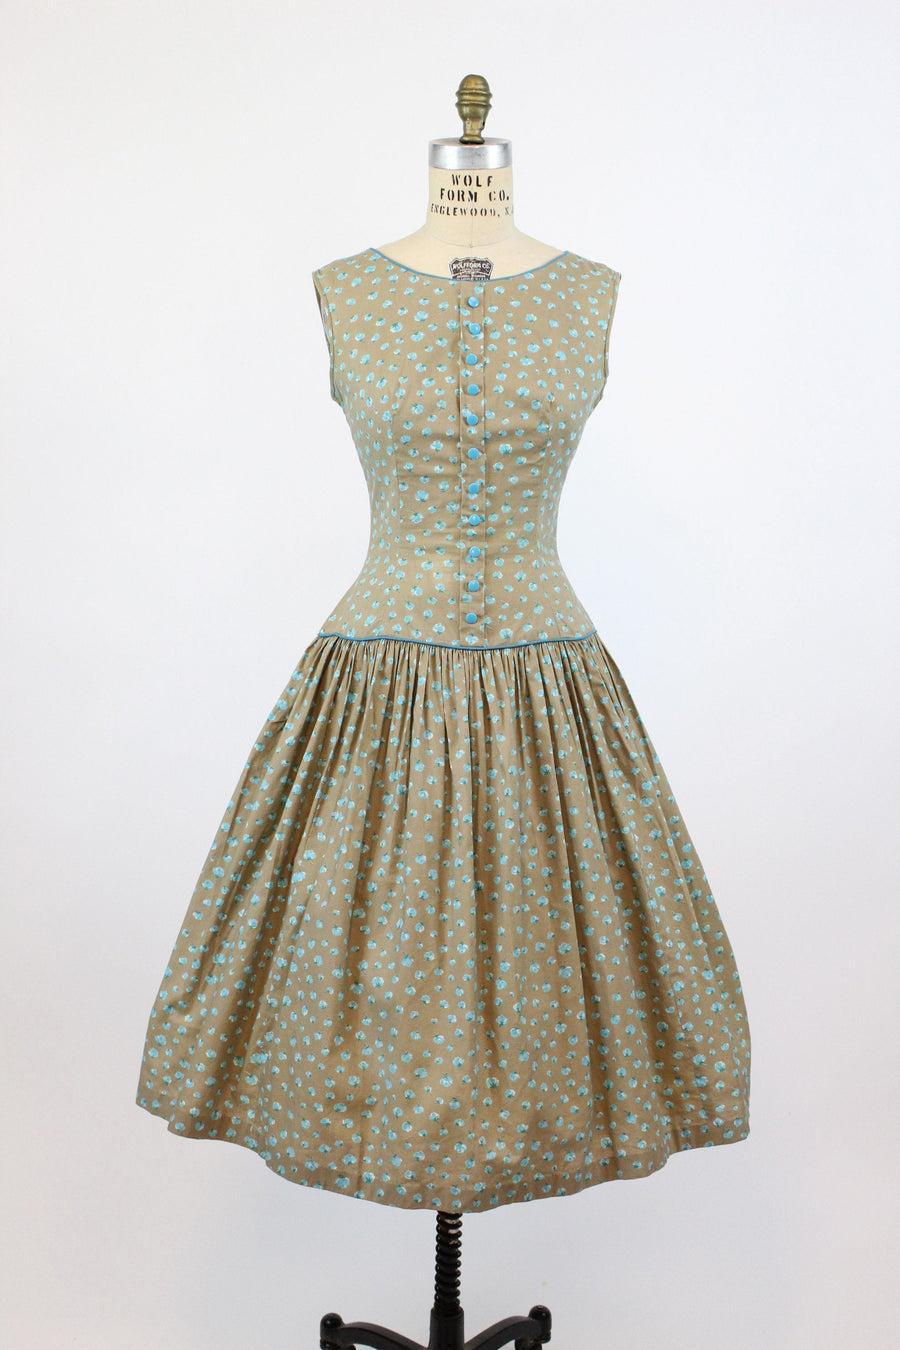 1950s rose print cotton dress small medium | new summer